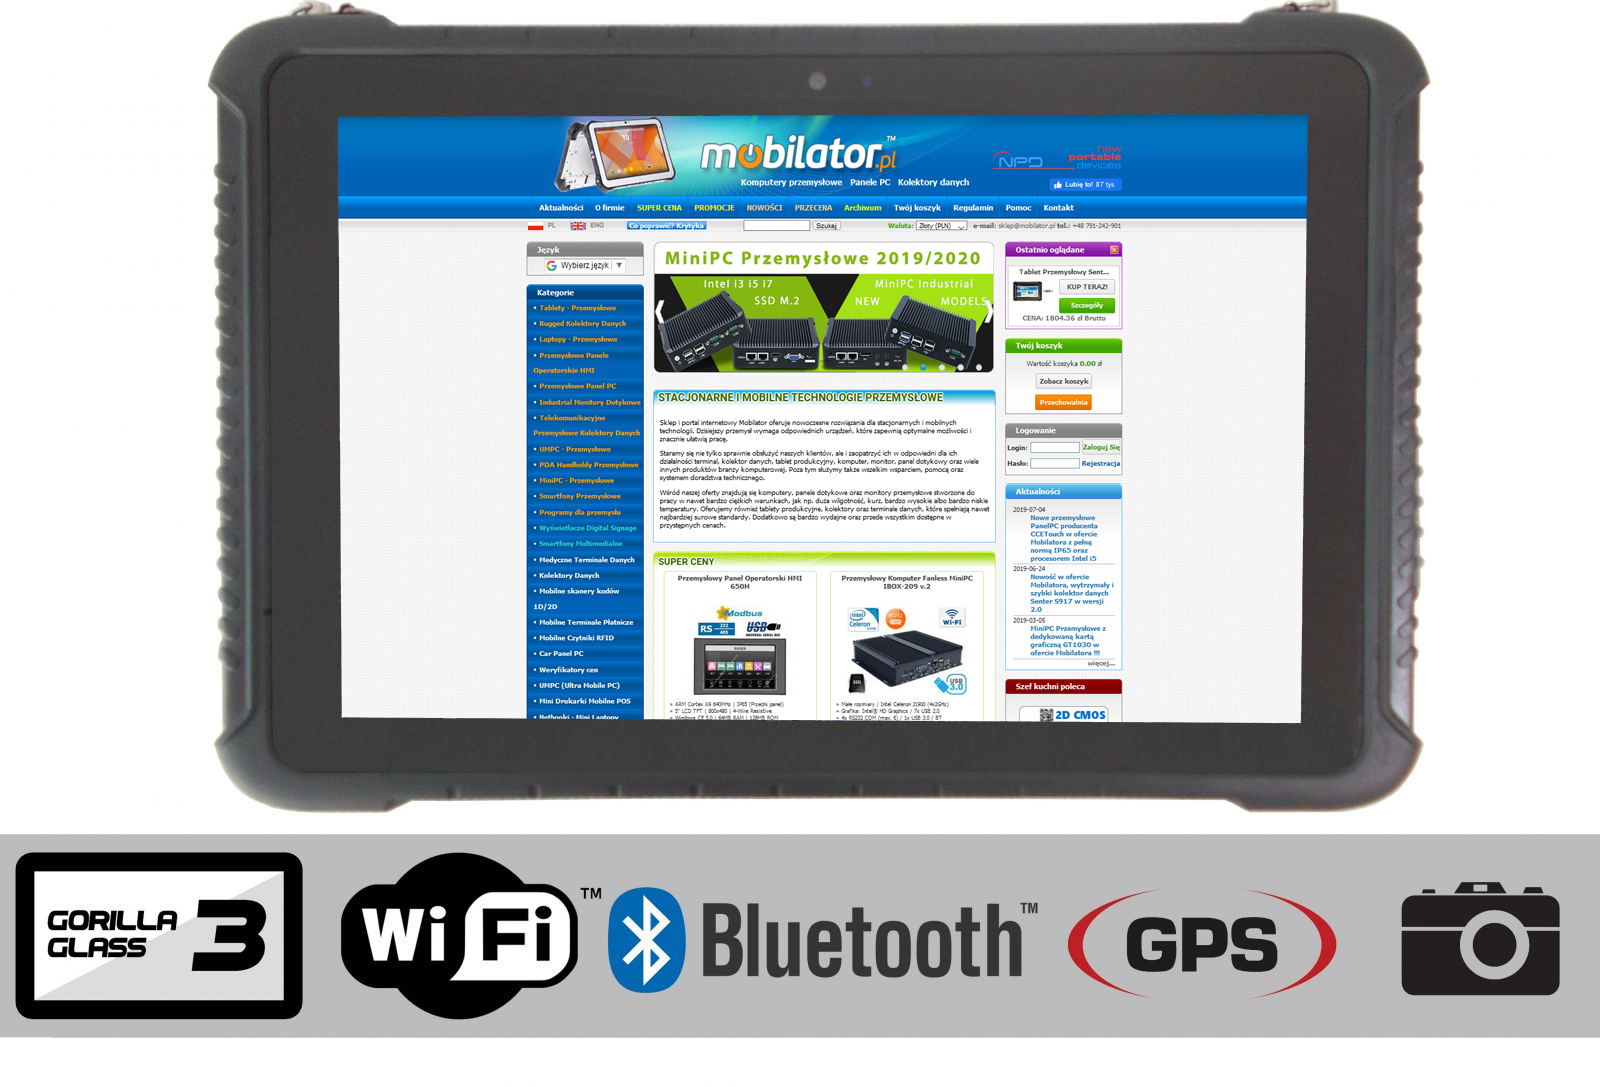 Windows 10 2GB RAM 32GB Flash EMMC Gorilla Glass 3 WiFi Bluetooth GPS Aparat Emdoor I16H mobilator.pl